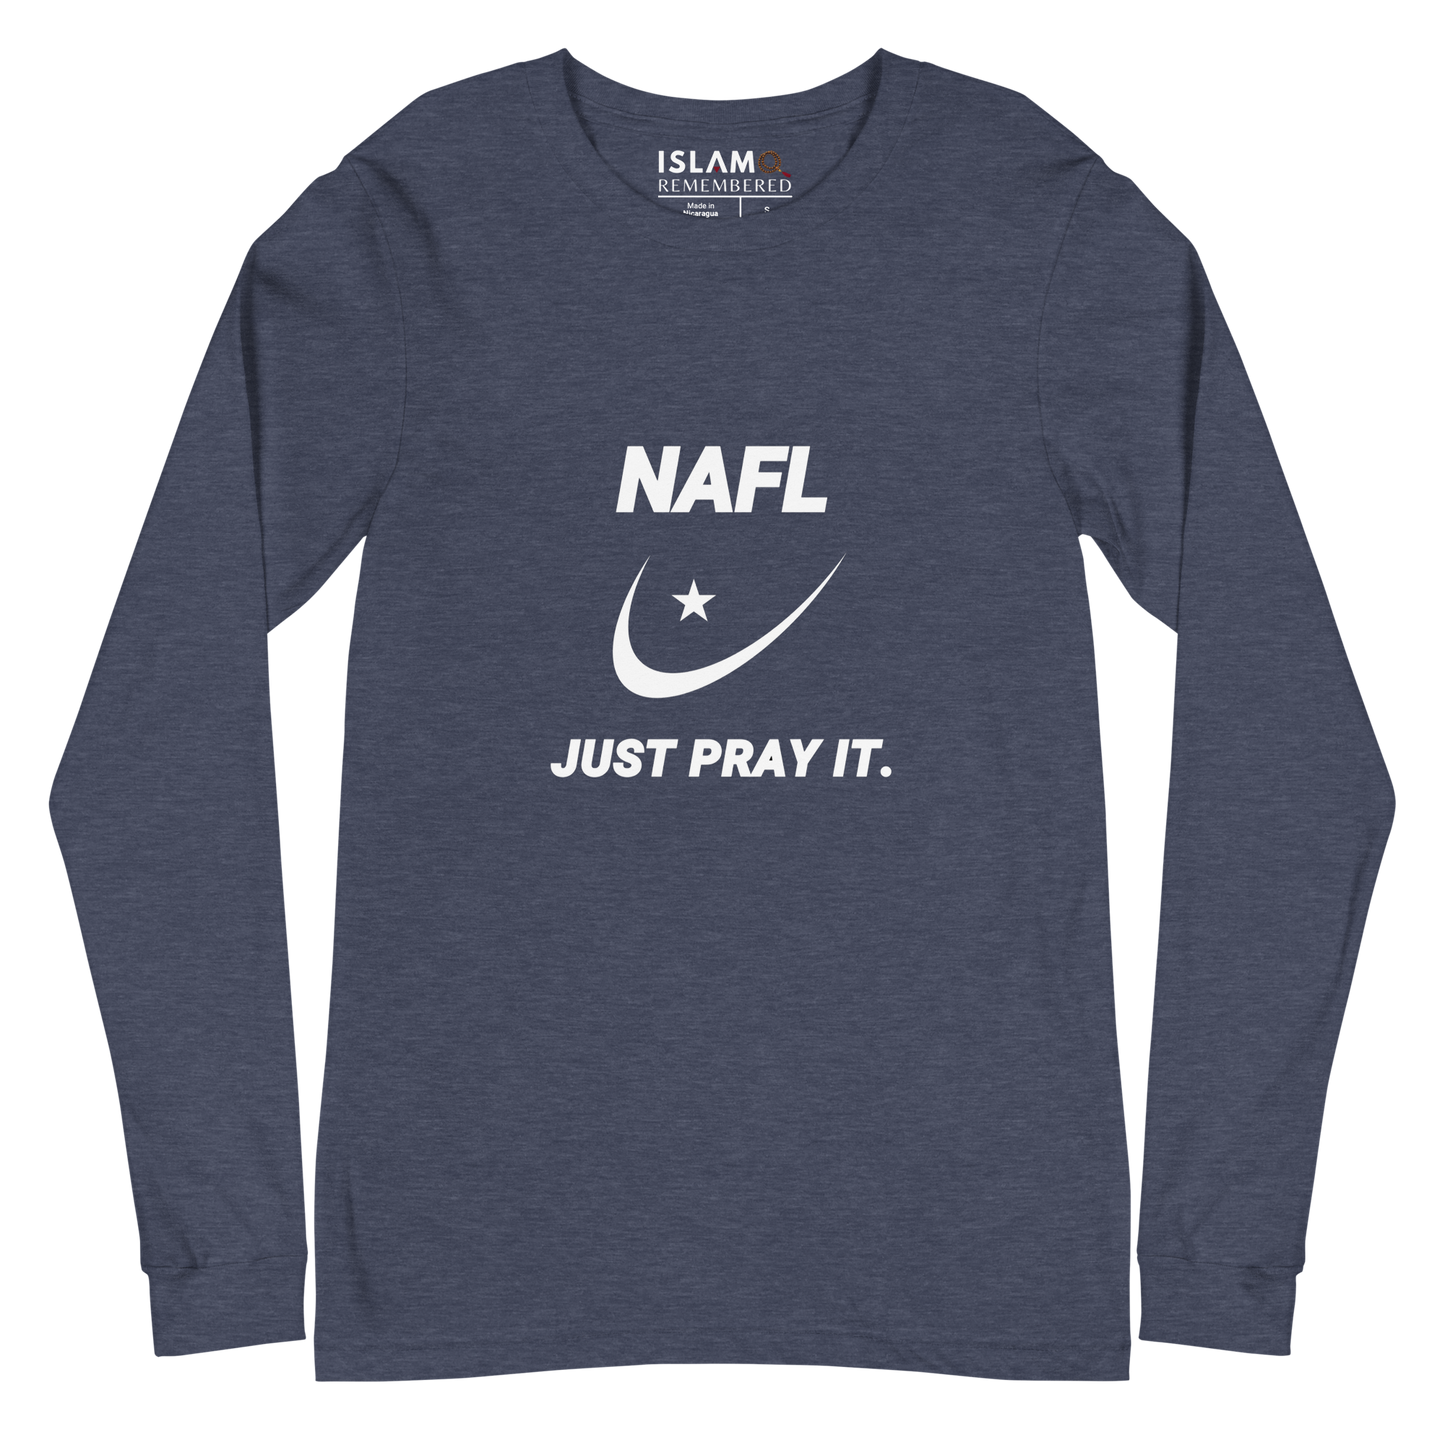 ADULT Long Sleeve Shirt - NAFL JUST PRAY IT w/ Logo - White